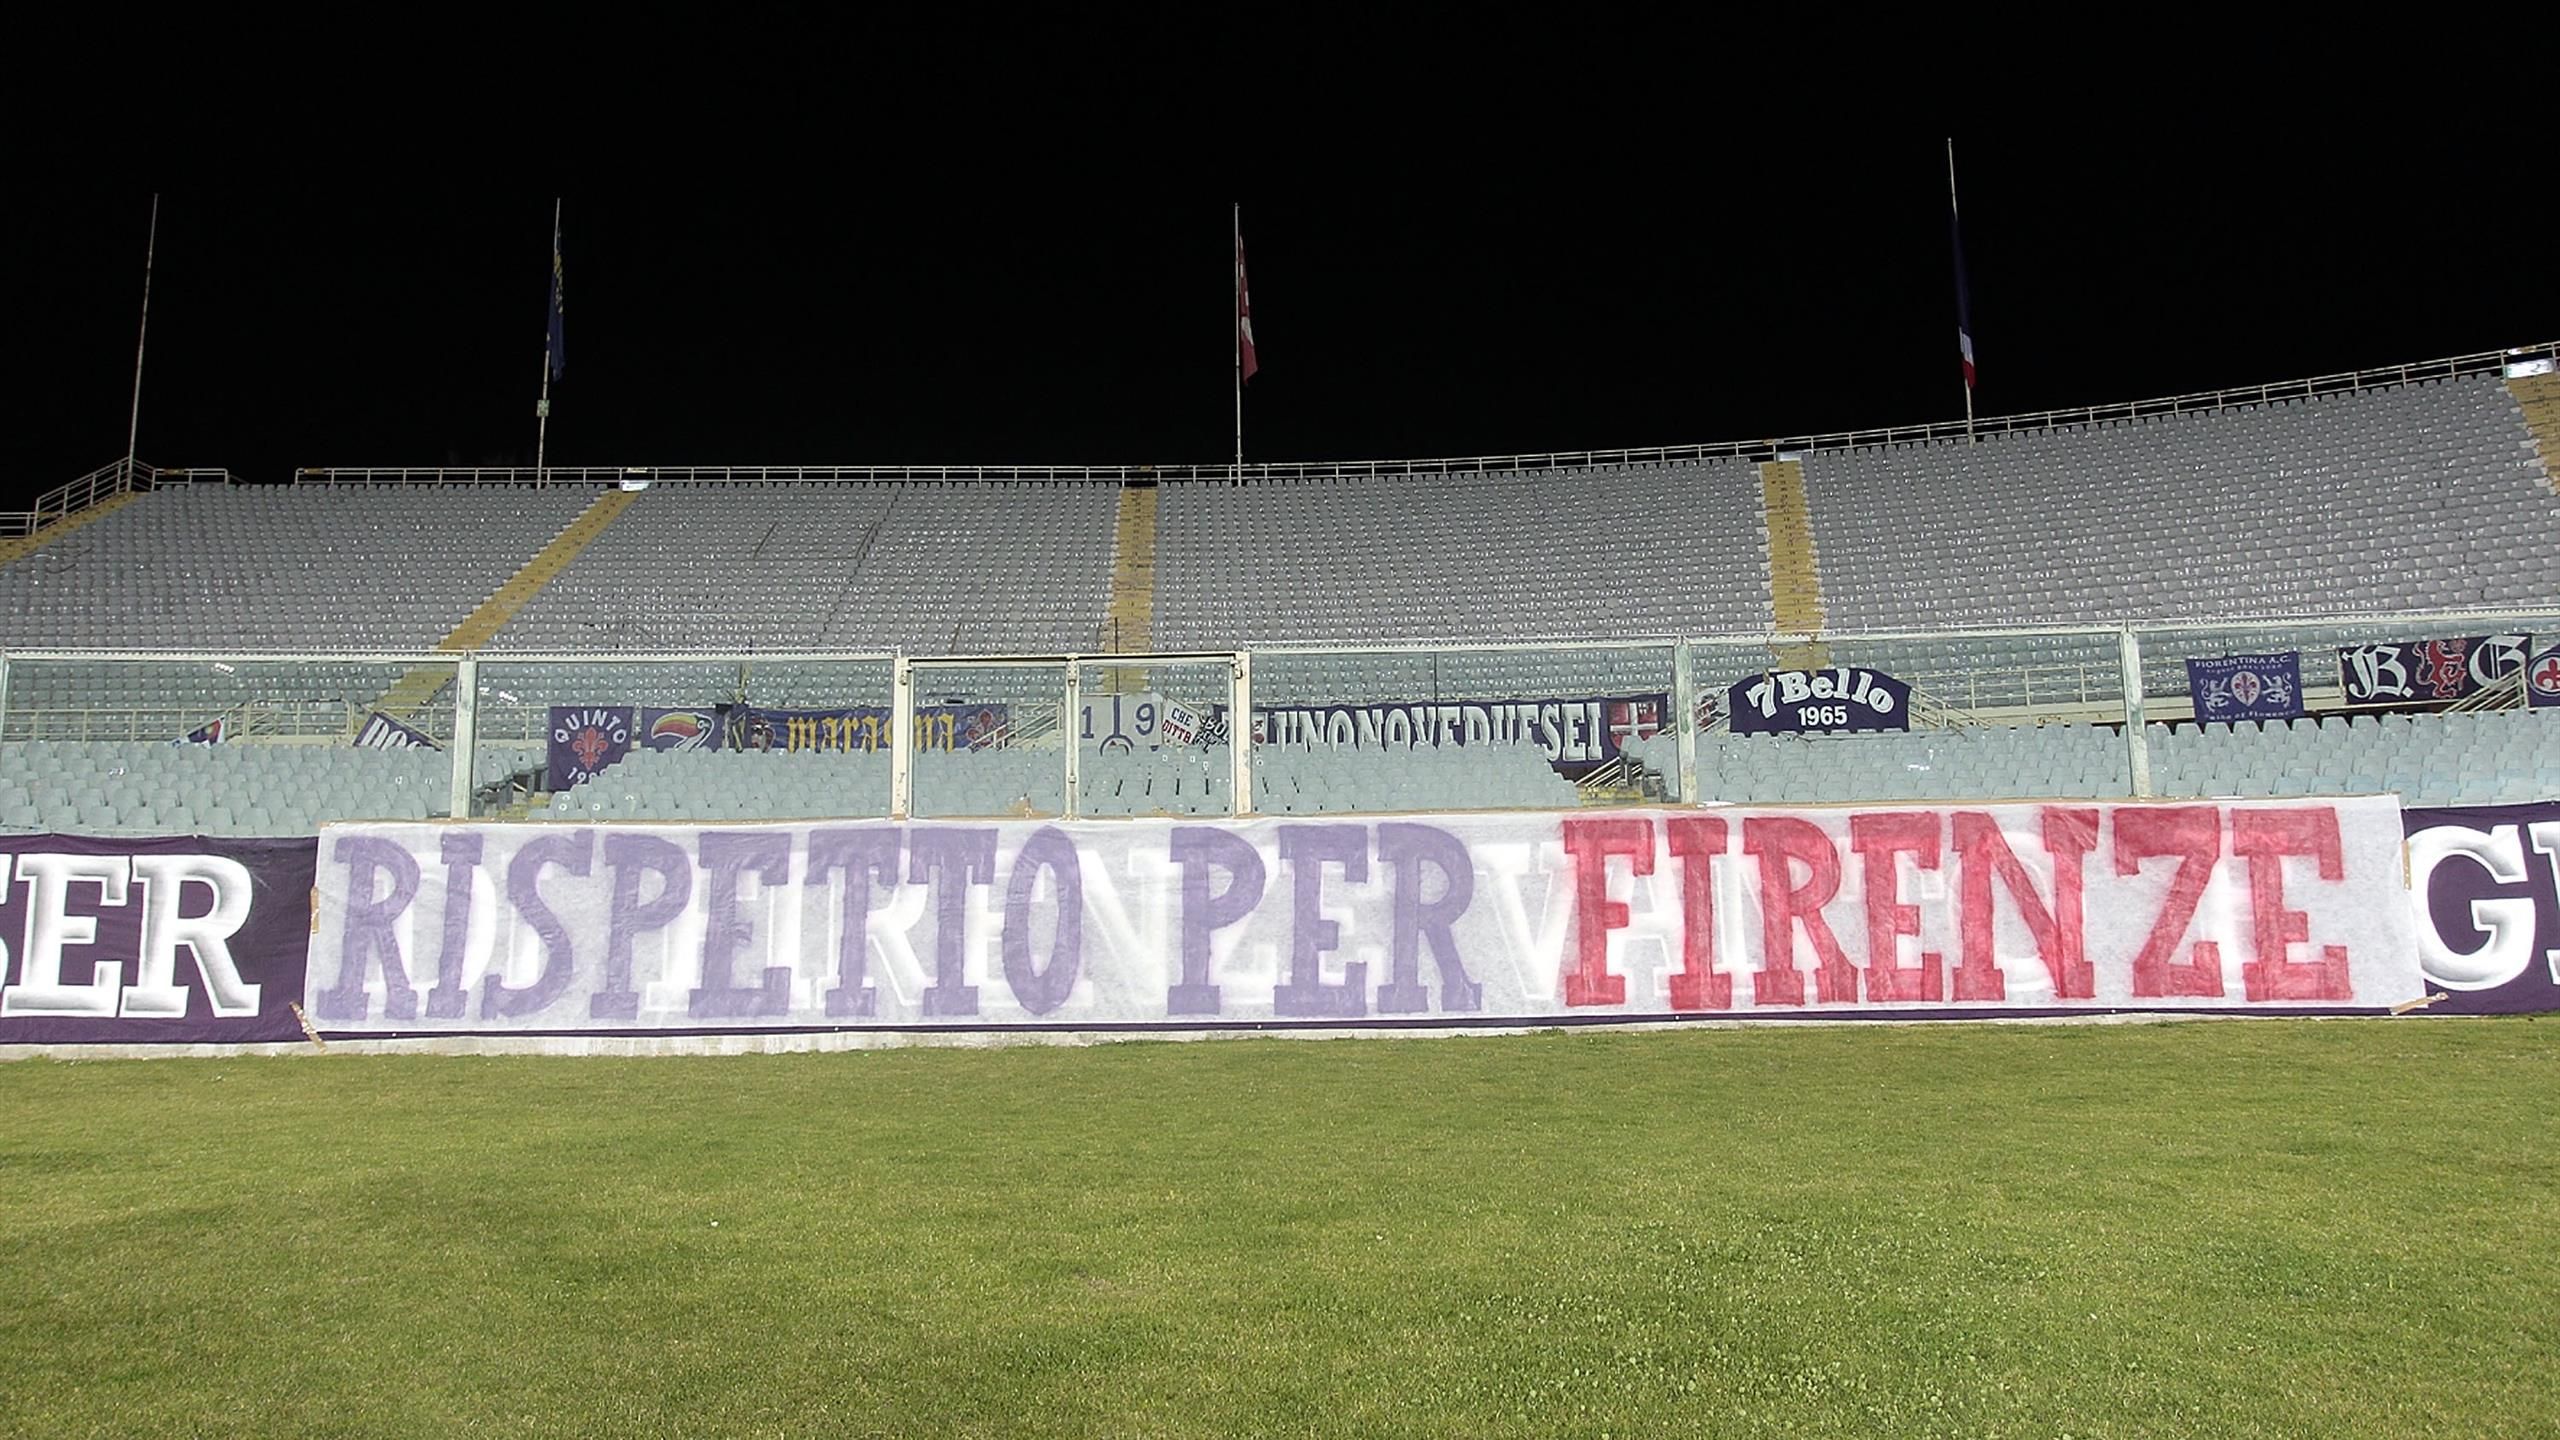 Firenze espugnata, la Juventus insegue l'Inter - Ticinonline